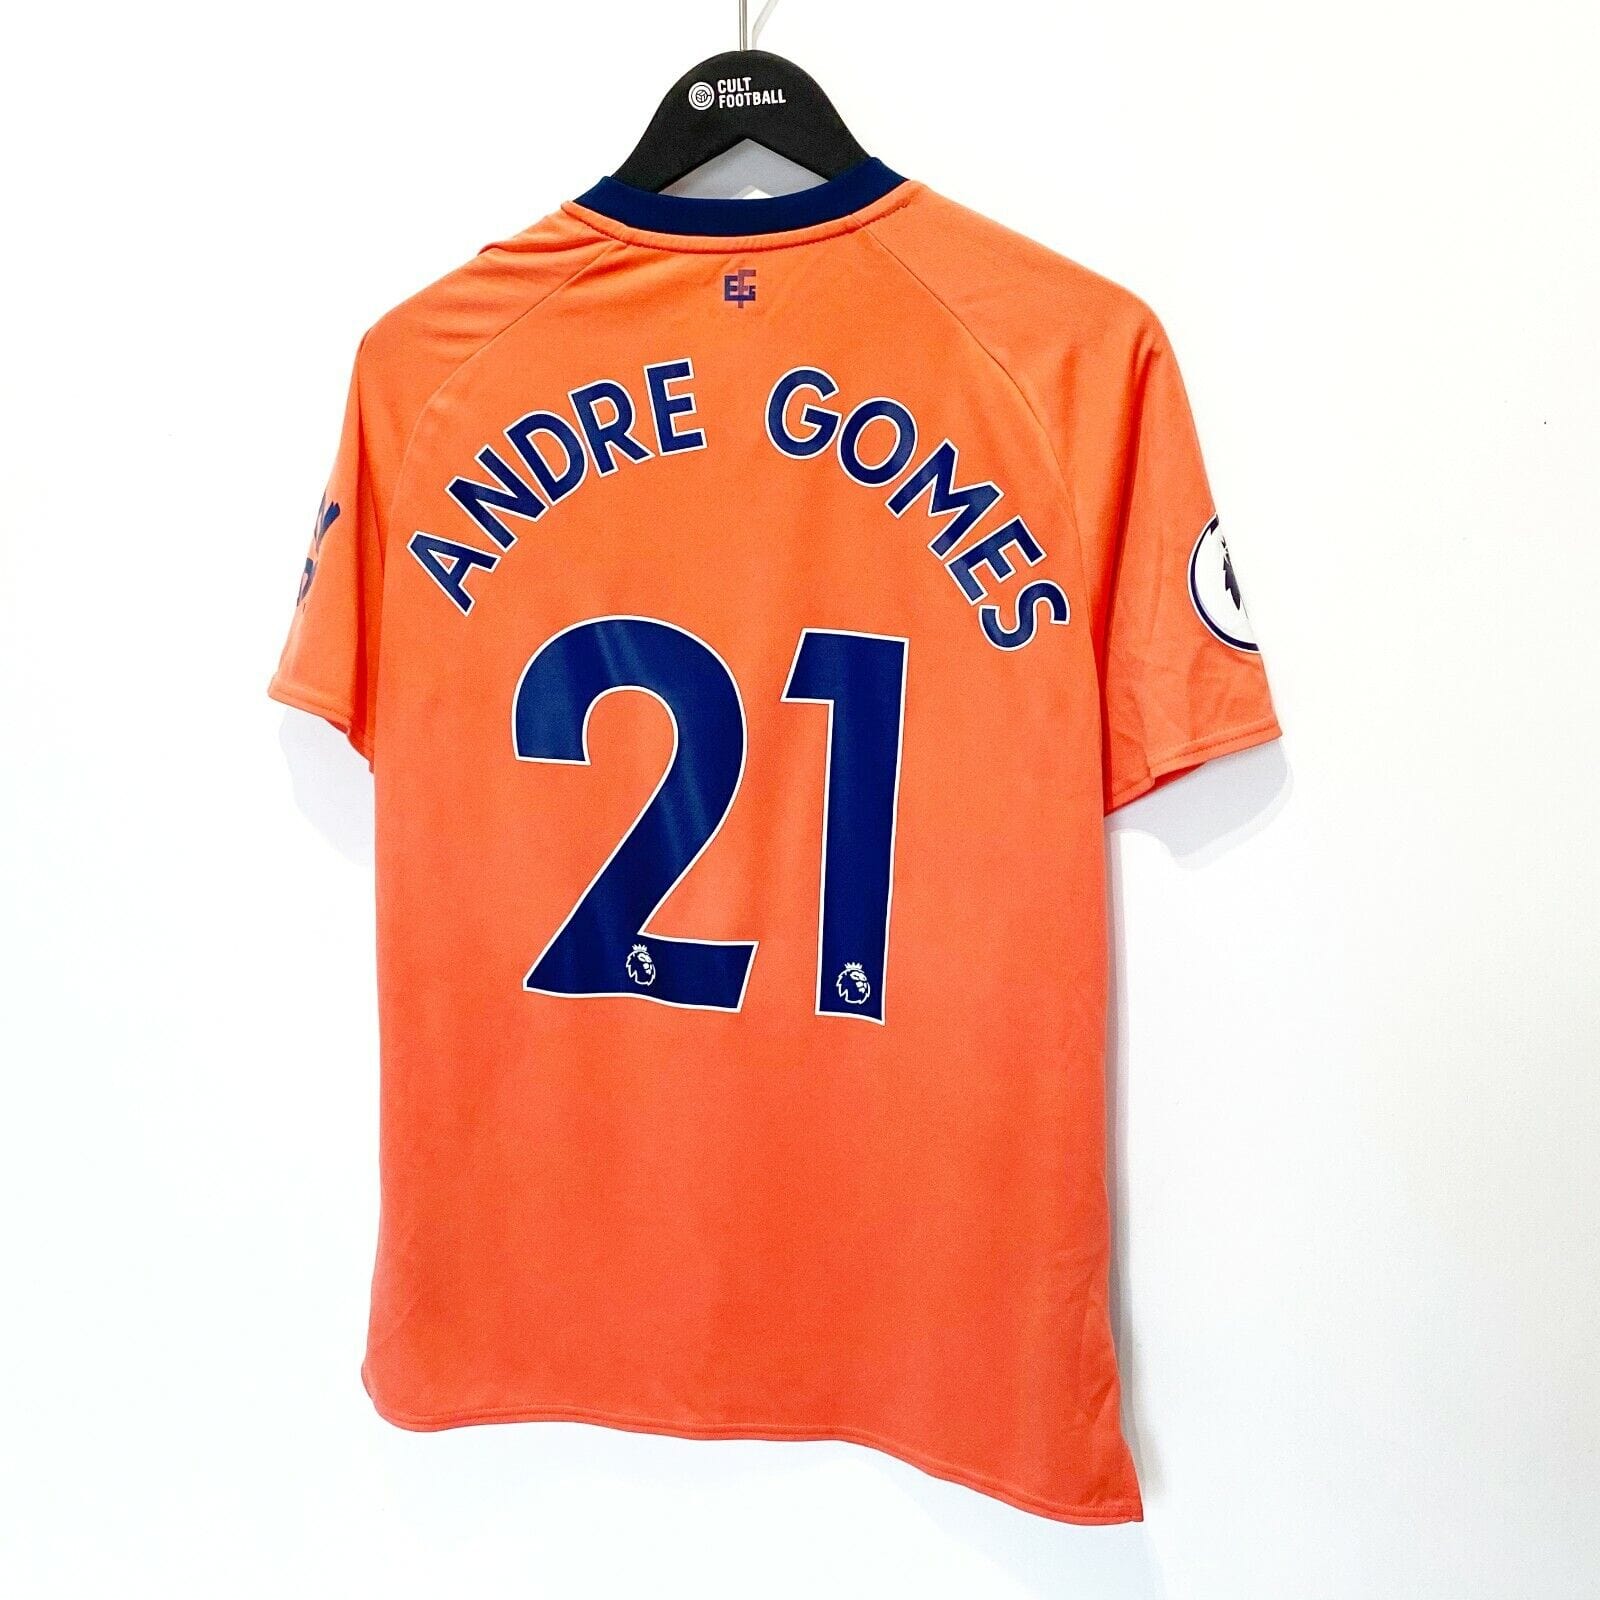 2019/20 ANDRE GOMES #21 Everton Vintage Umbro Away Football Shirt (M) Portugal